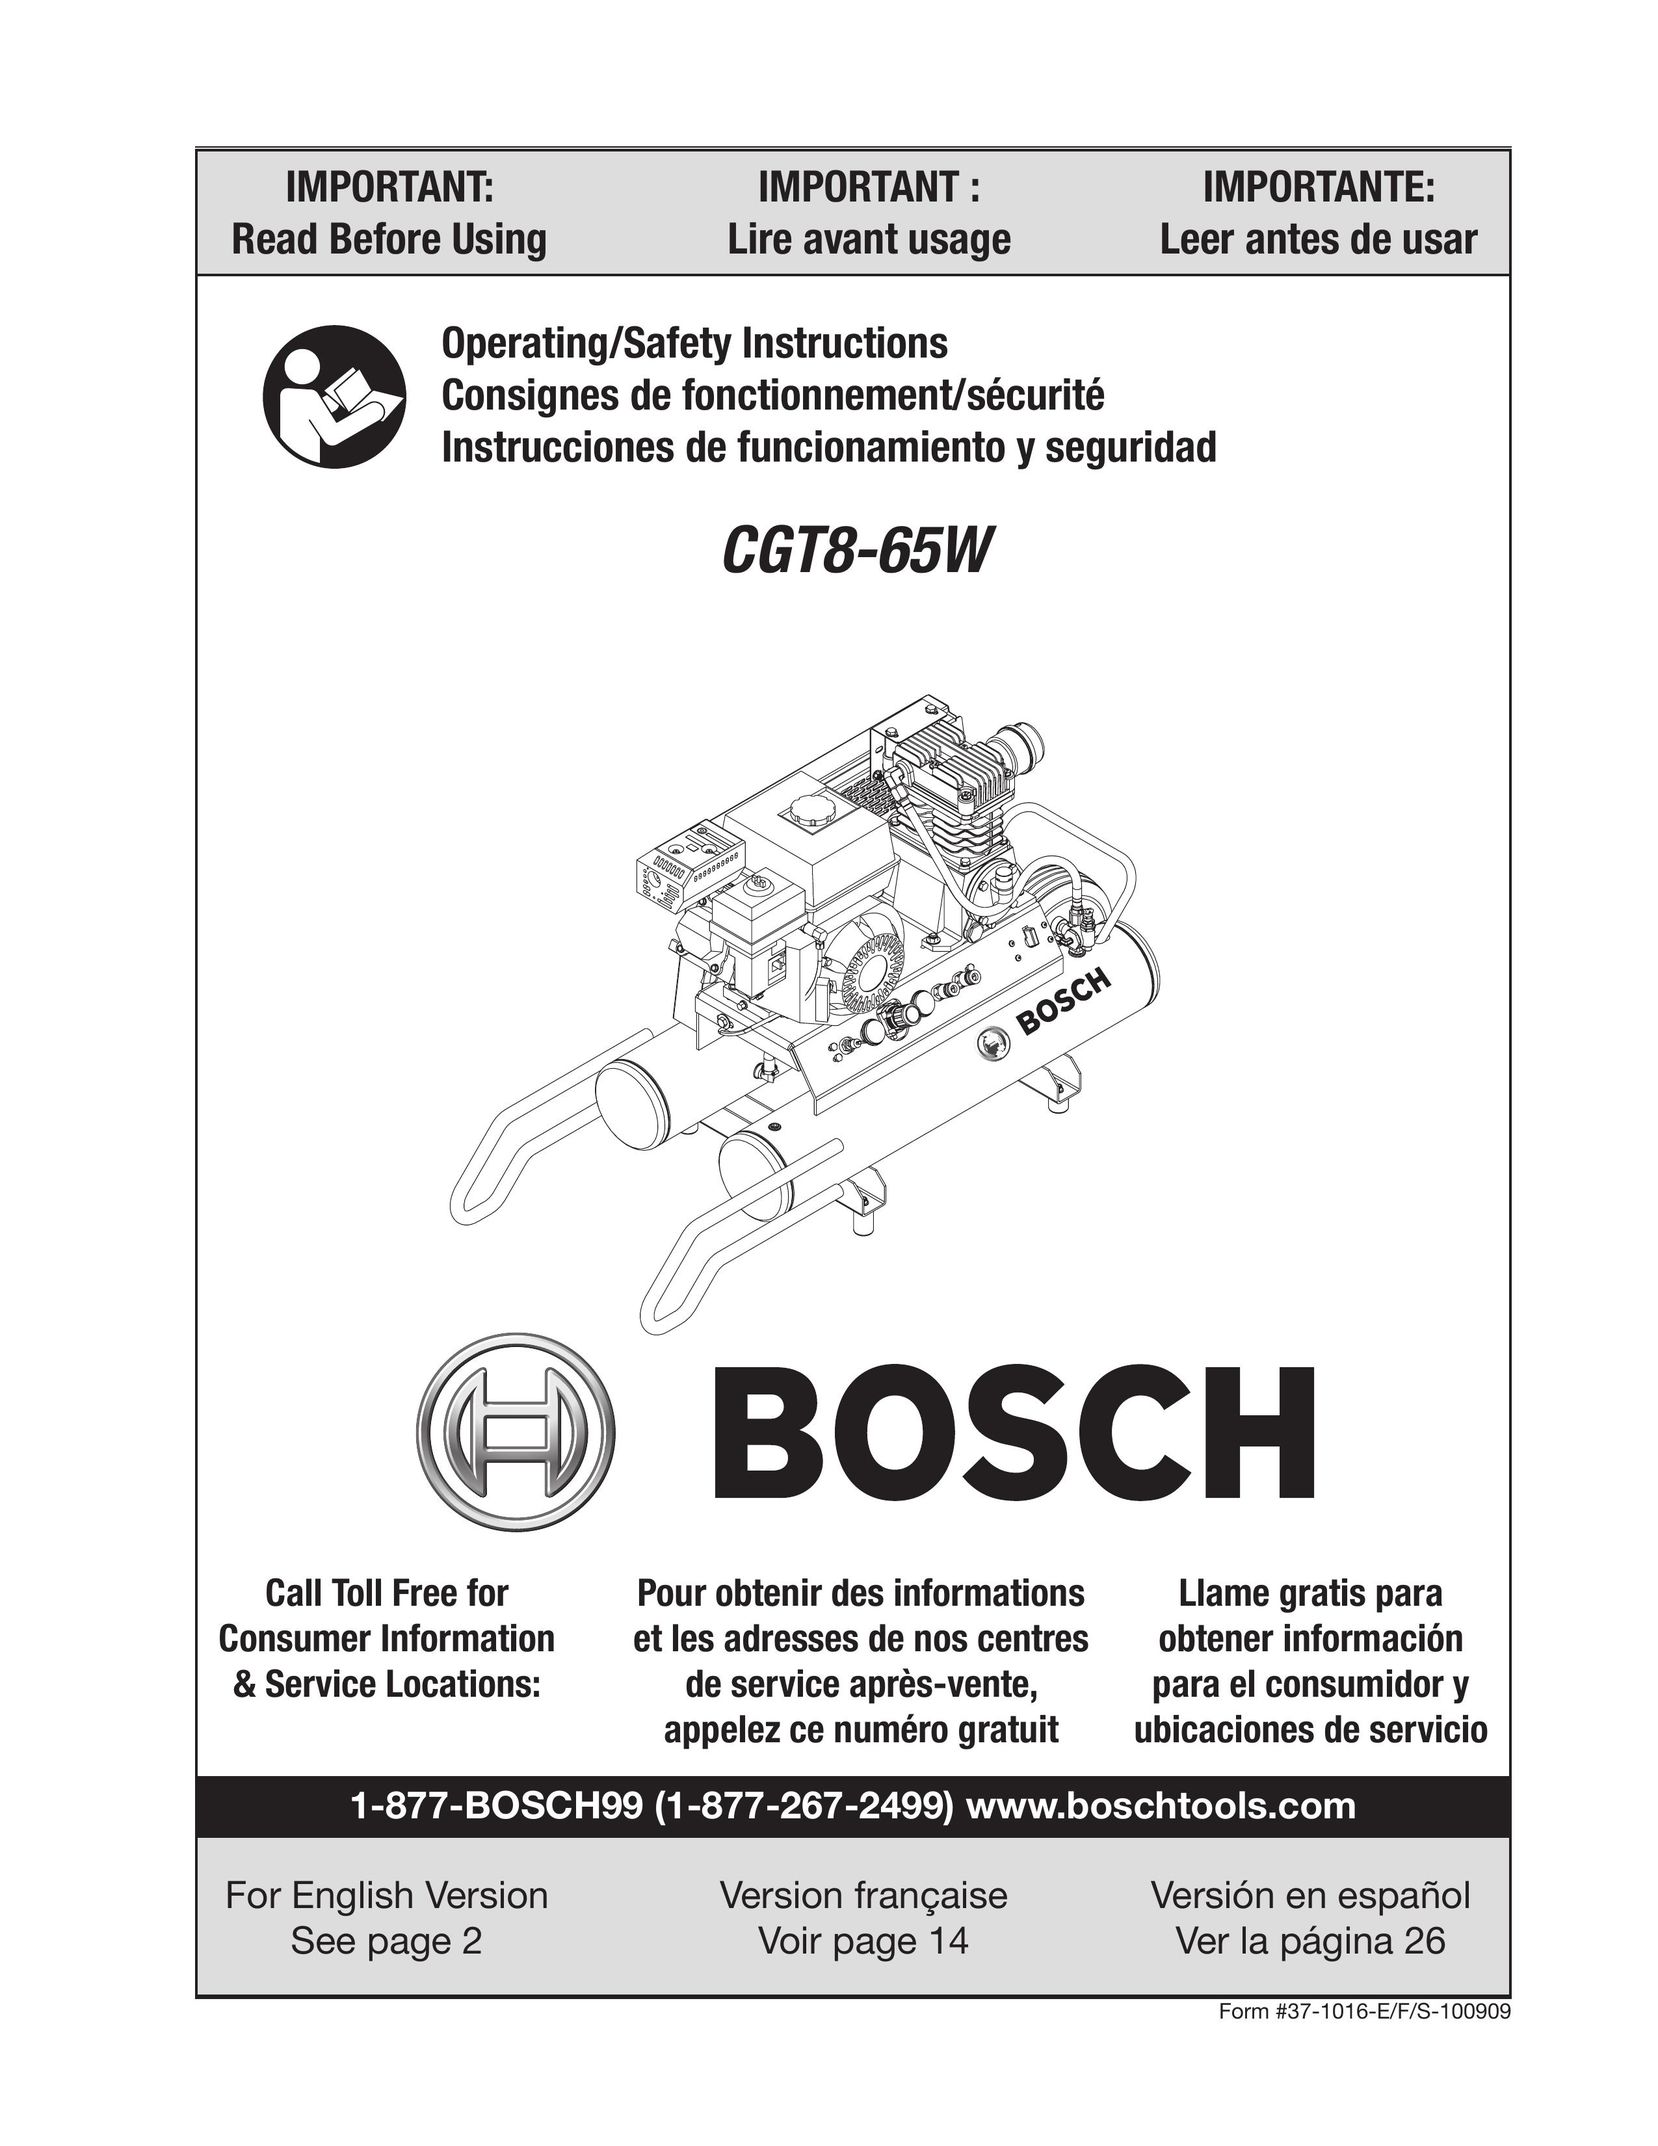 Bosch Power Tools CGT8-65W Air Compressor User Manual